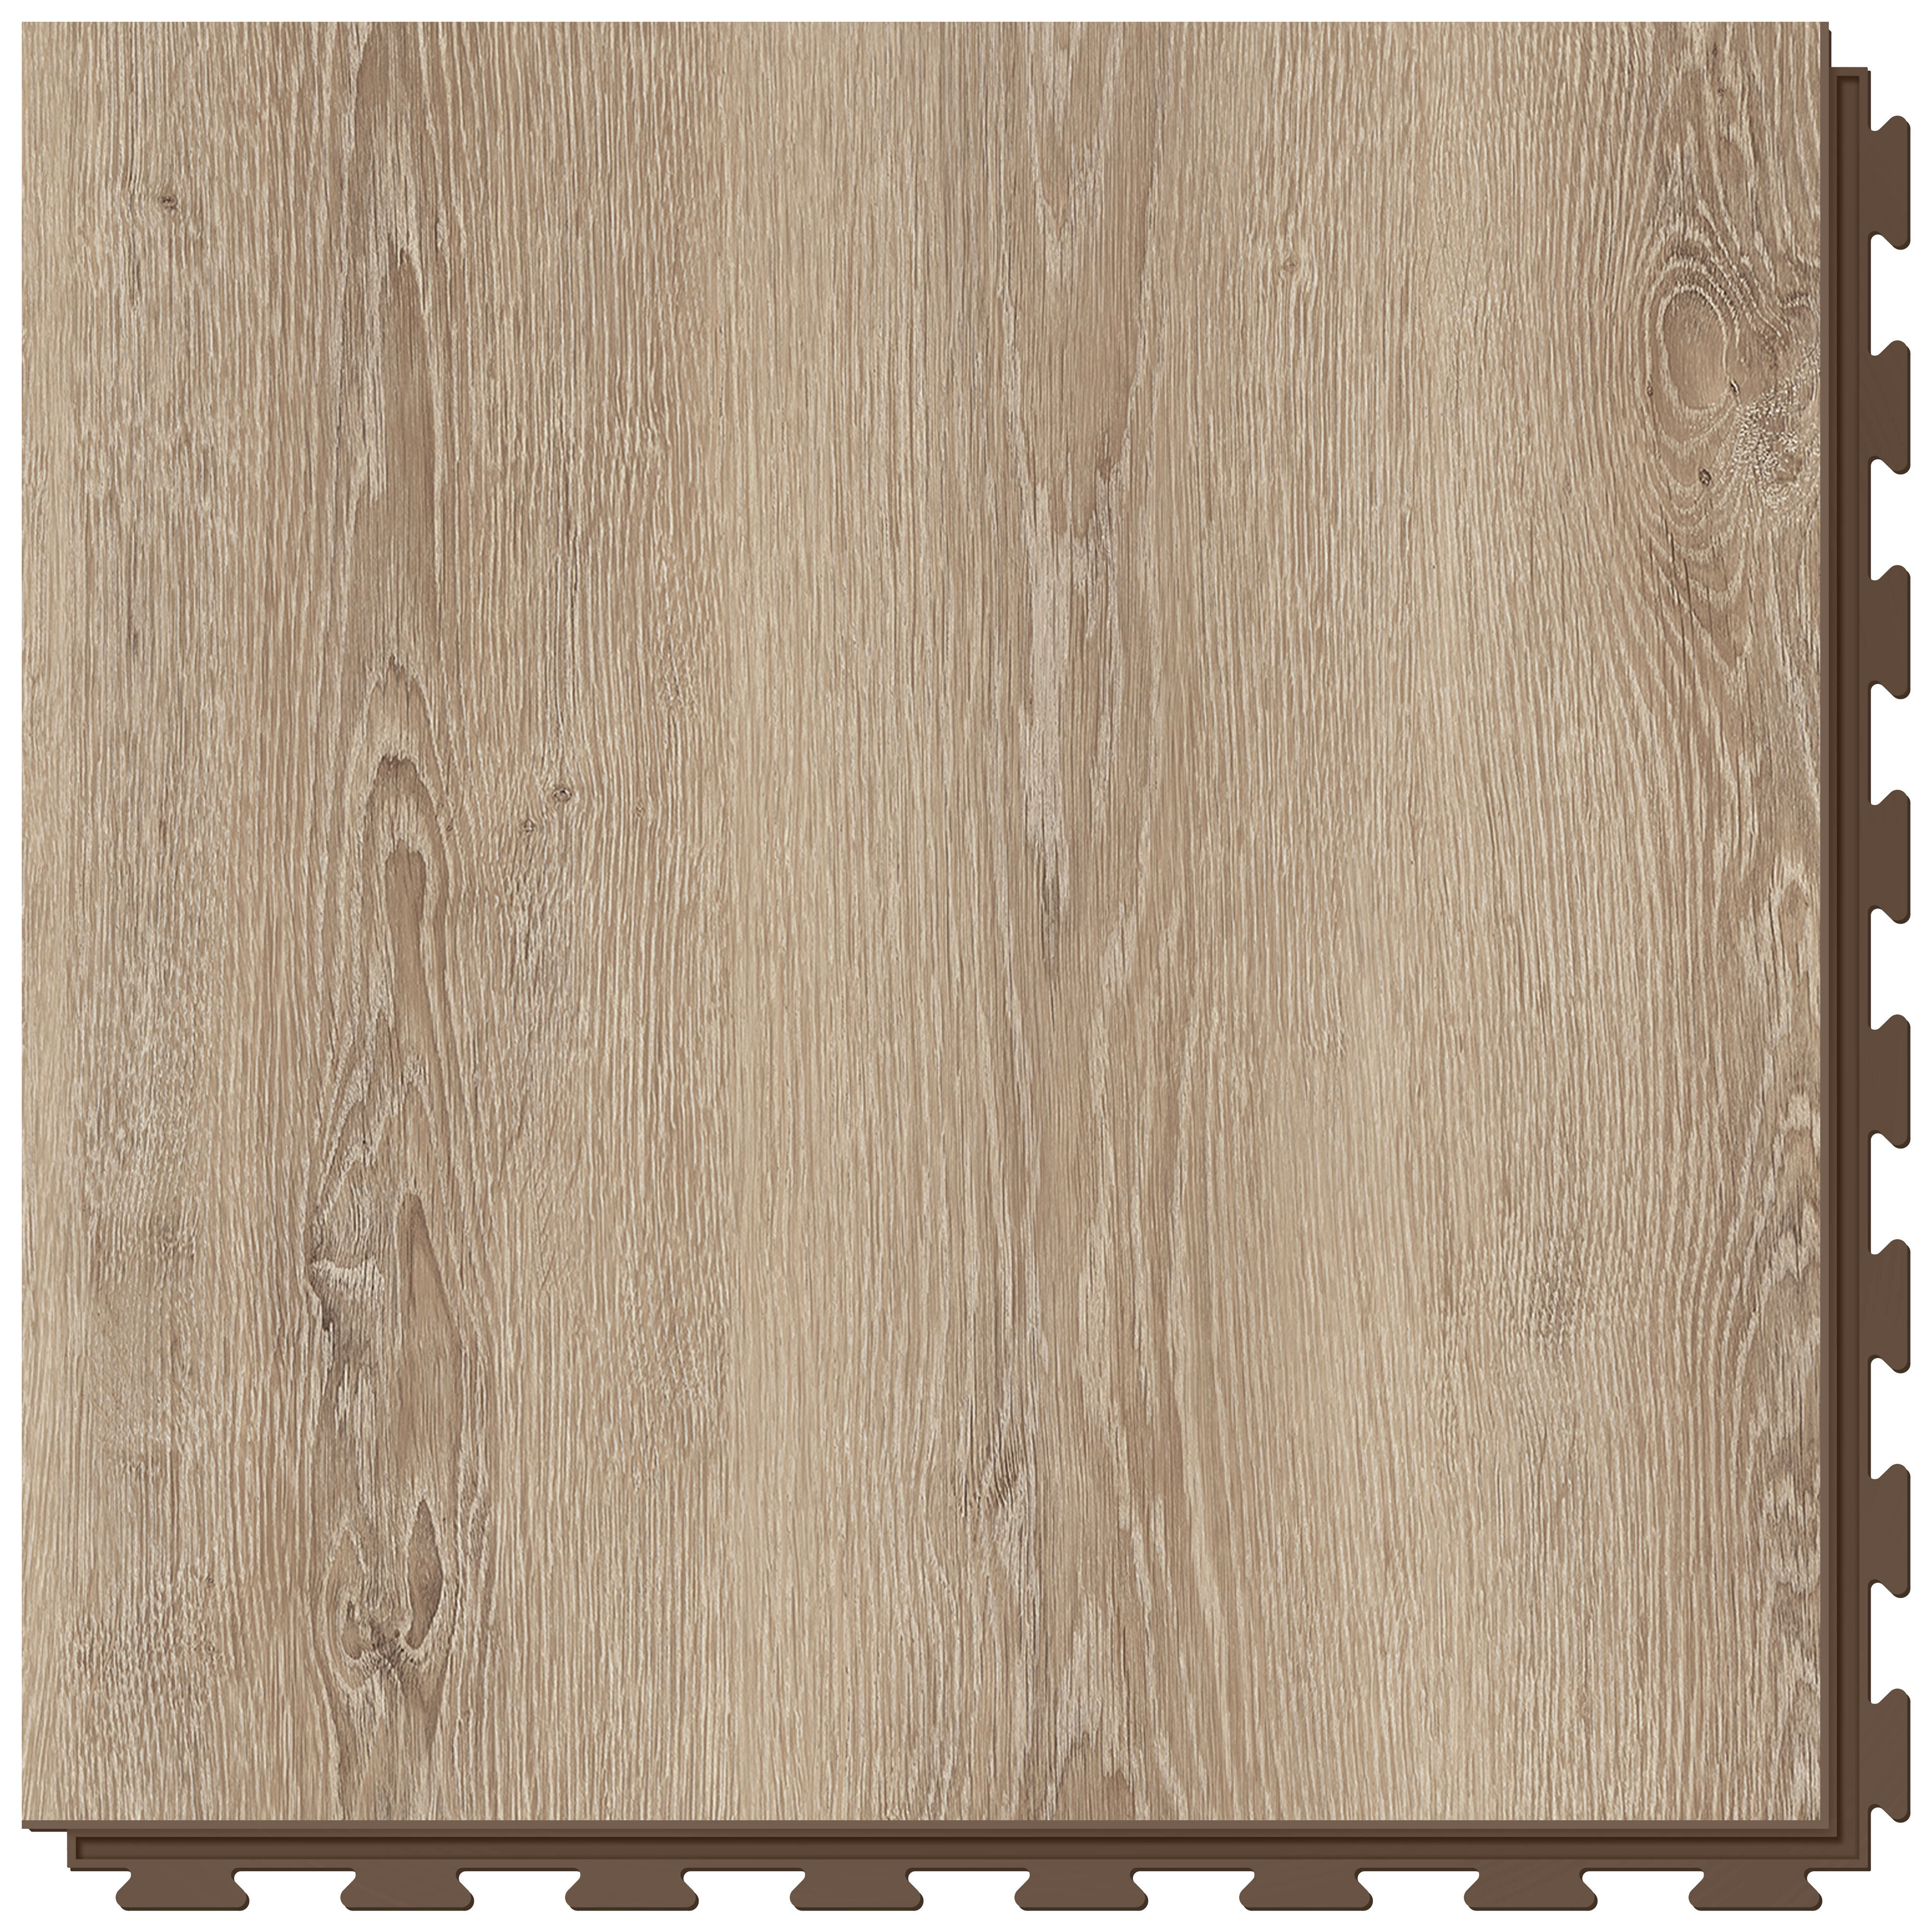 Hnedá PVC vinylová dlažba Fortelock Business Tyrolean oak W001 Brown - dĺžka 66,8 cm, šírka 66,8 cm, výška 0,7 cm